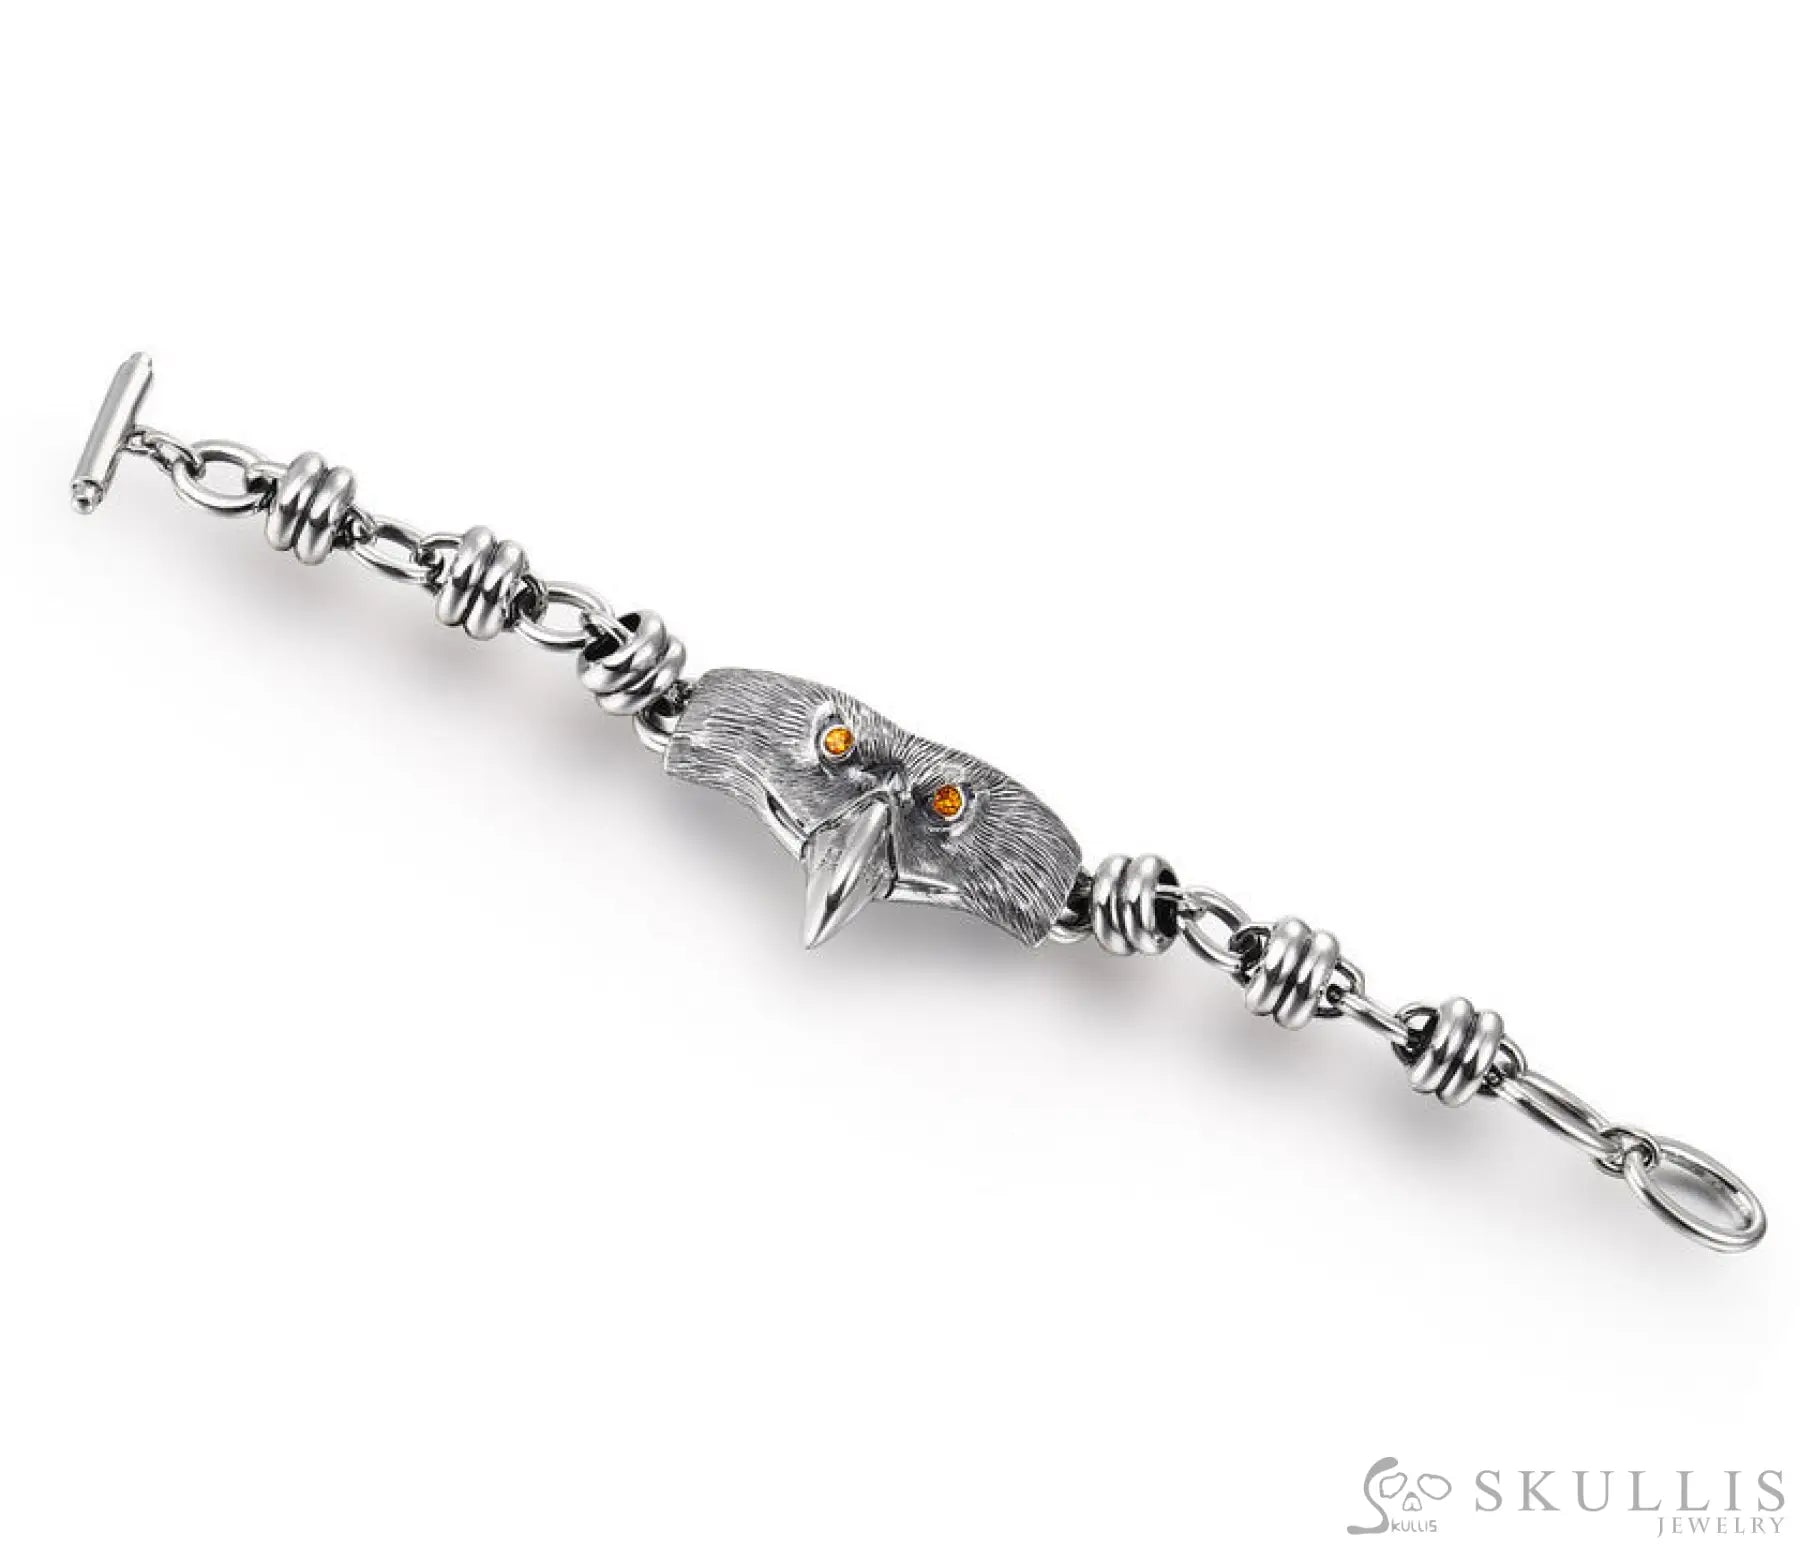 Gem Skulls Bracelet With Granet - Eye Eagle Loop Chain In 925 Sterling Silver Skull Bracelets